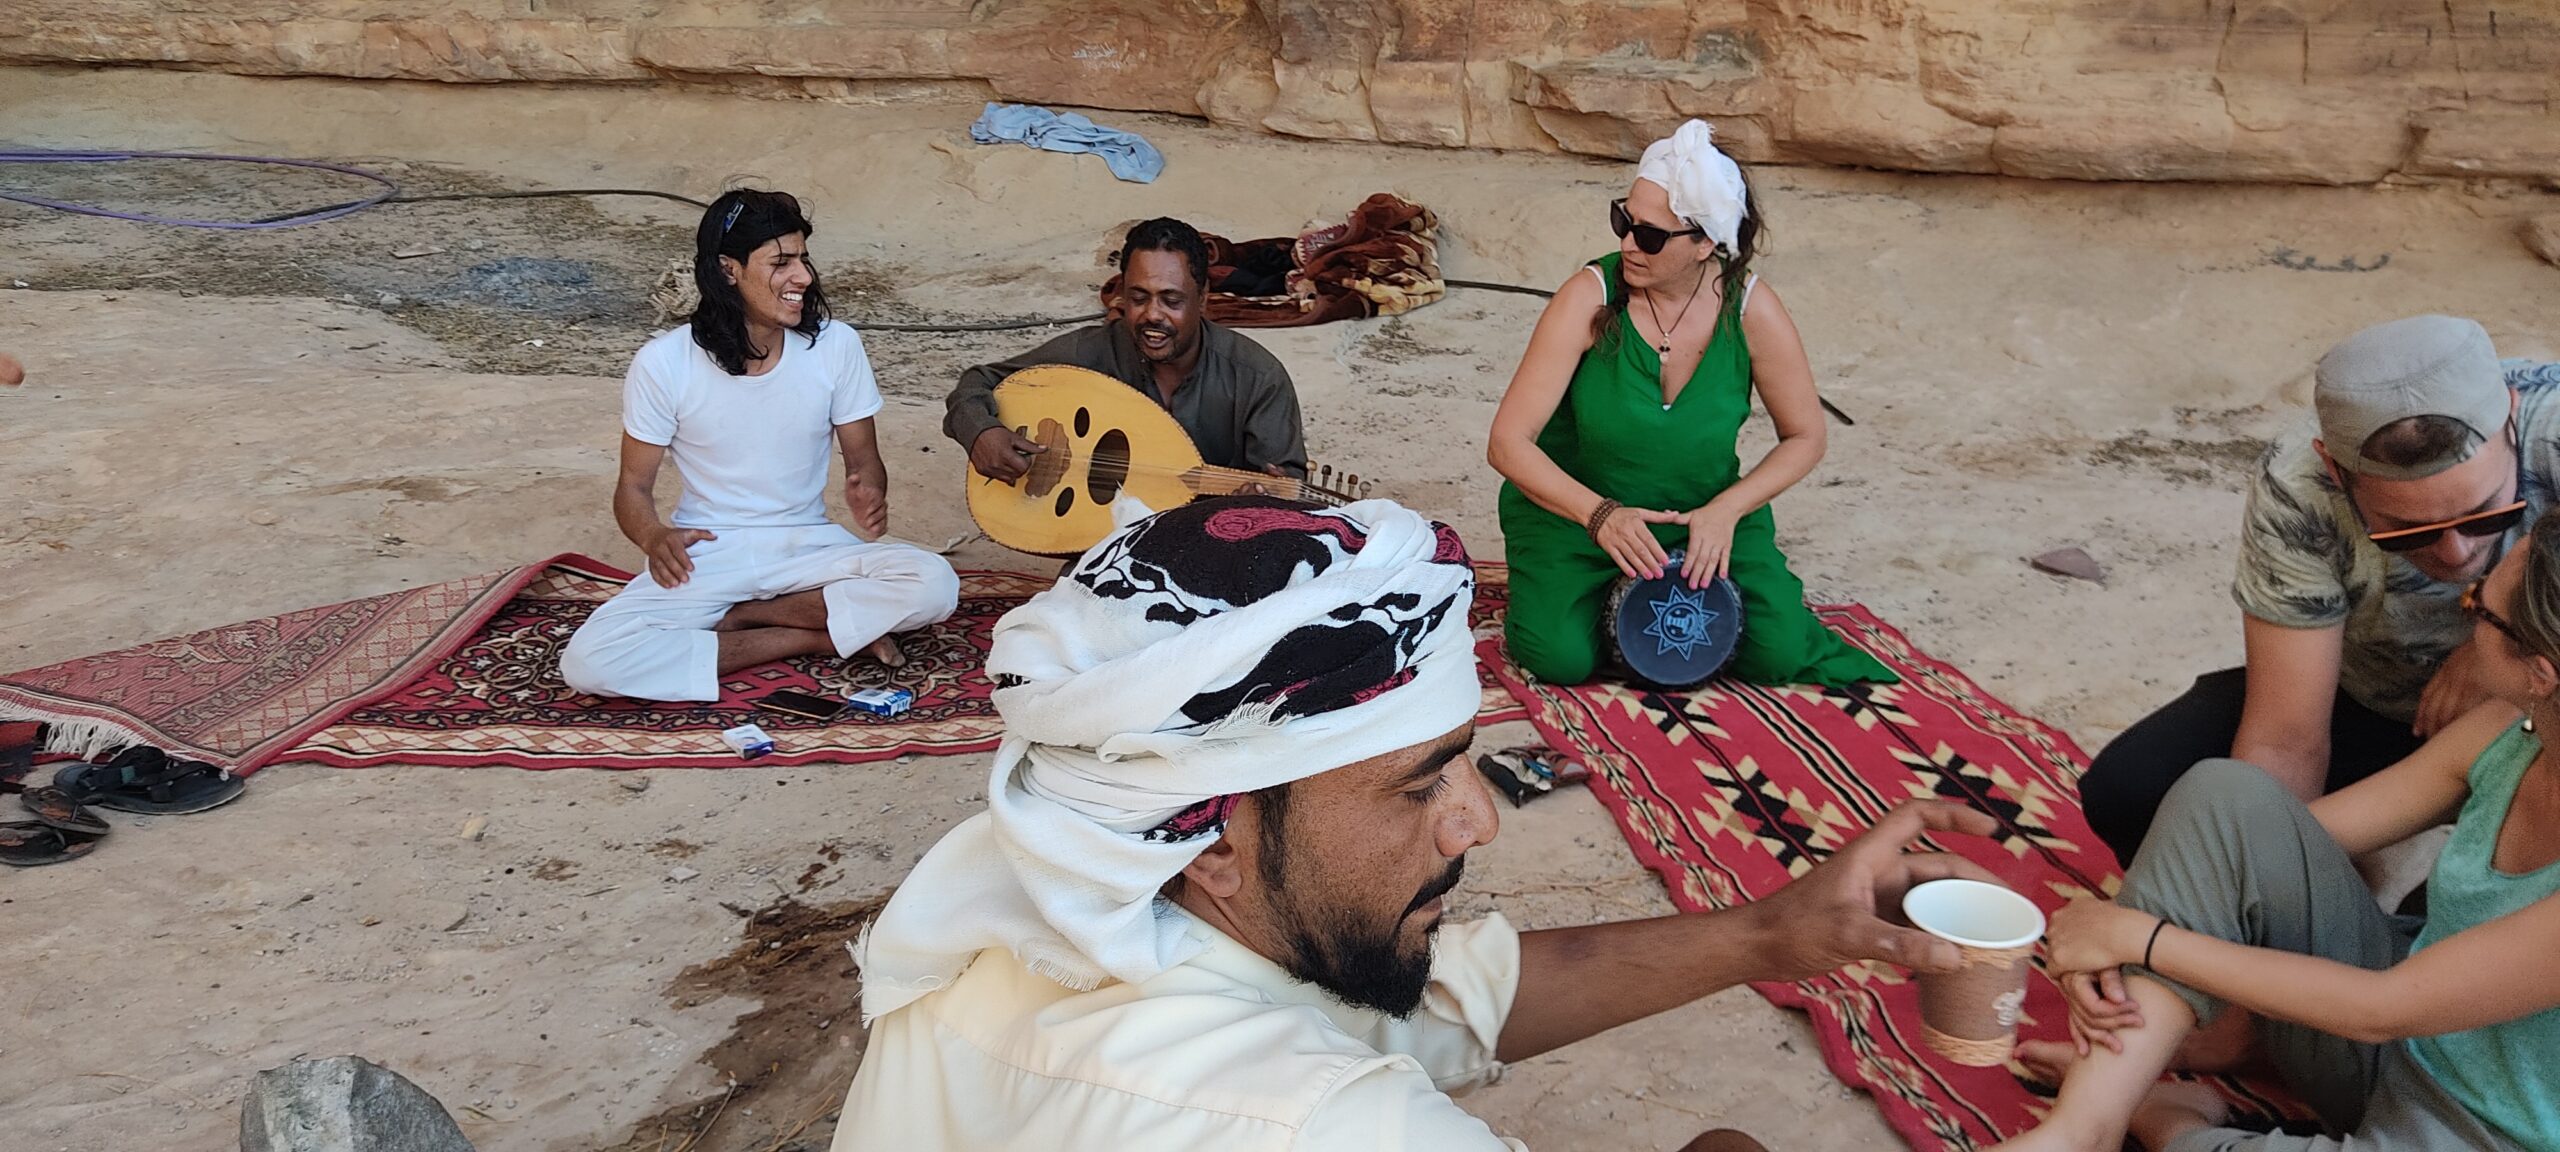 wadirumhappy KKonscious retreat workshop music desert